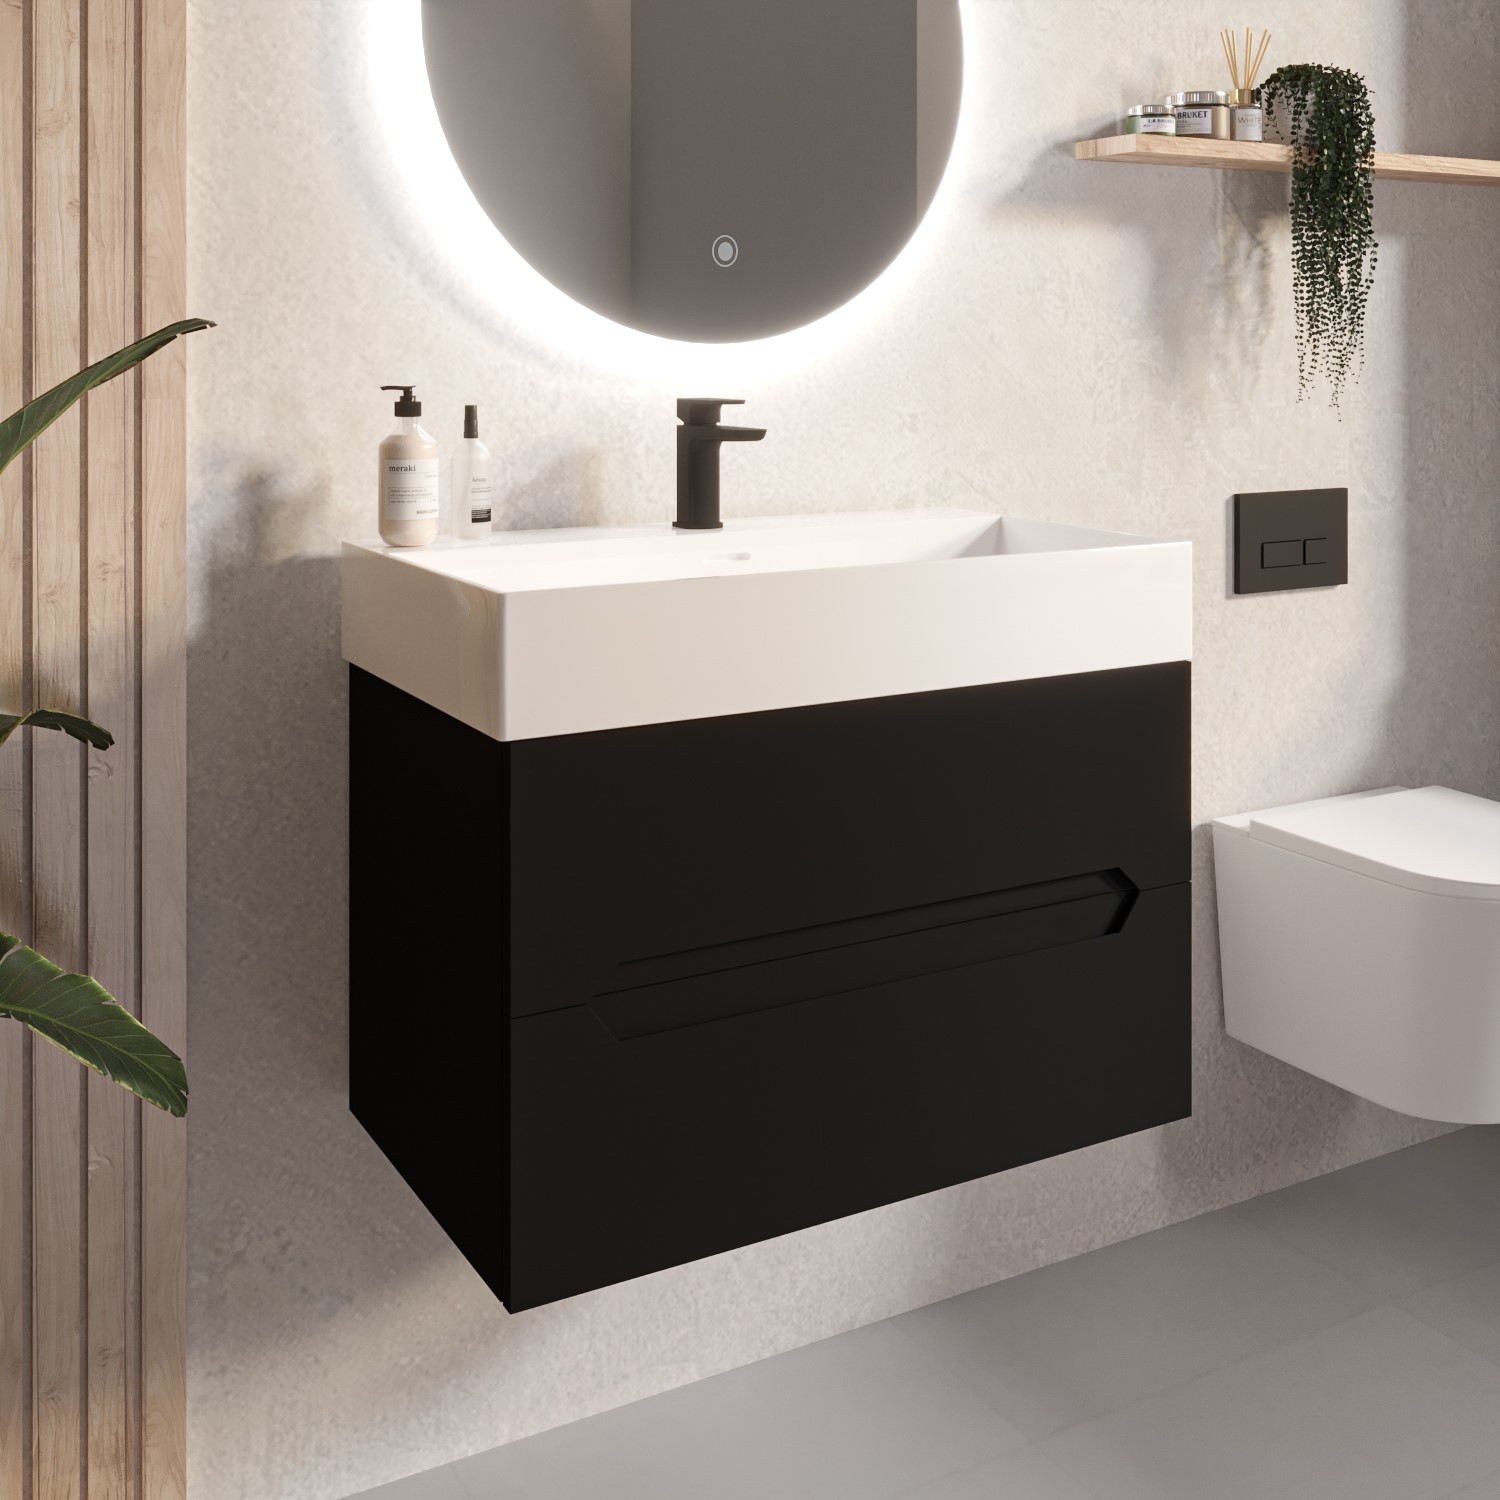 Omile Bathroom Wall Hung Ceramic Basin Sink Vanity Unit Cabinets & Tap Sets 